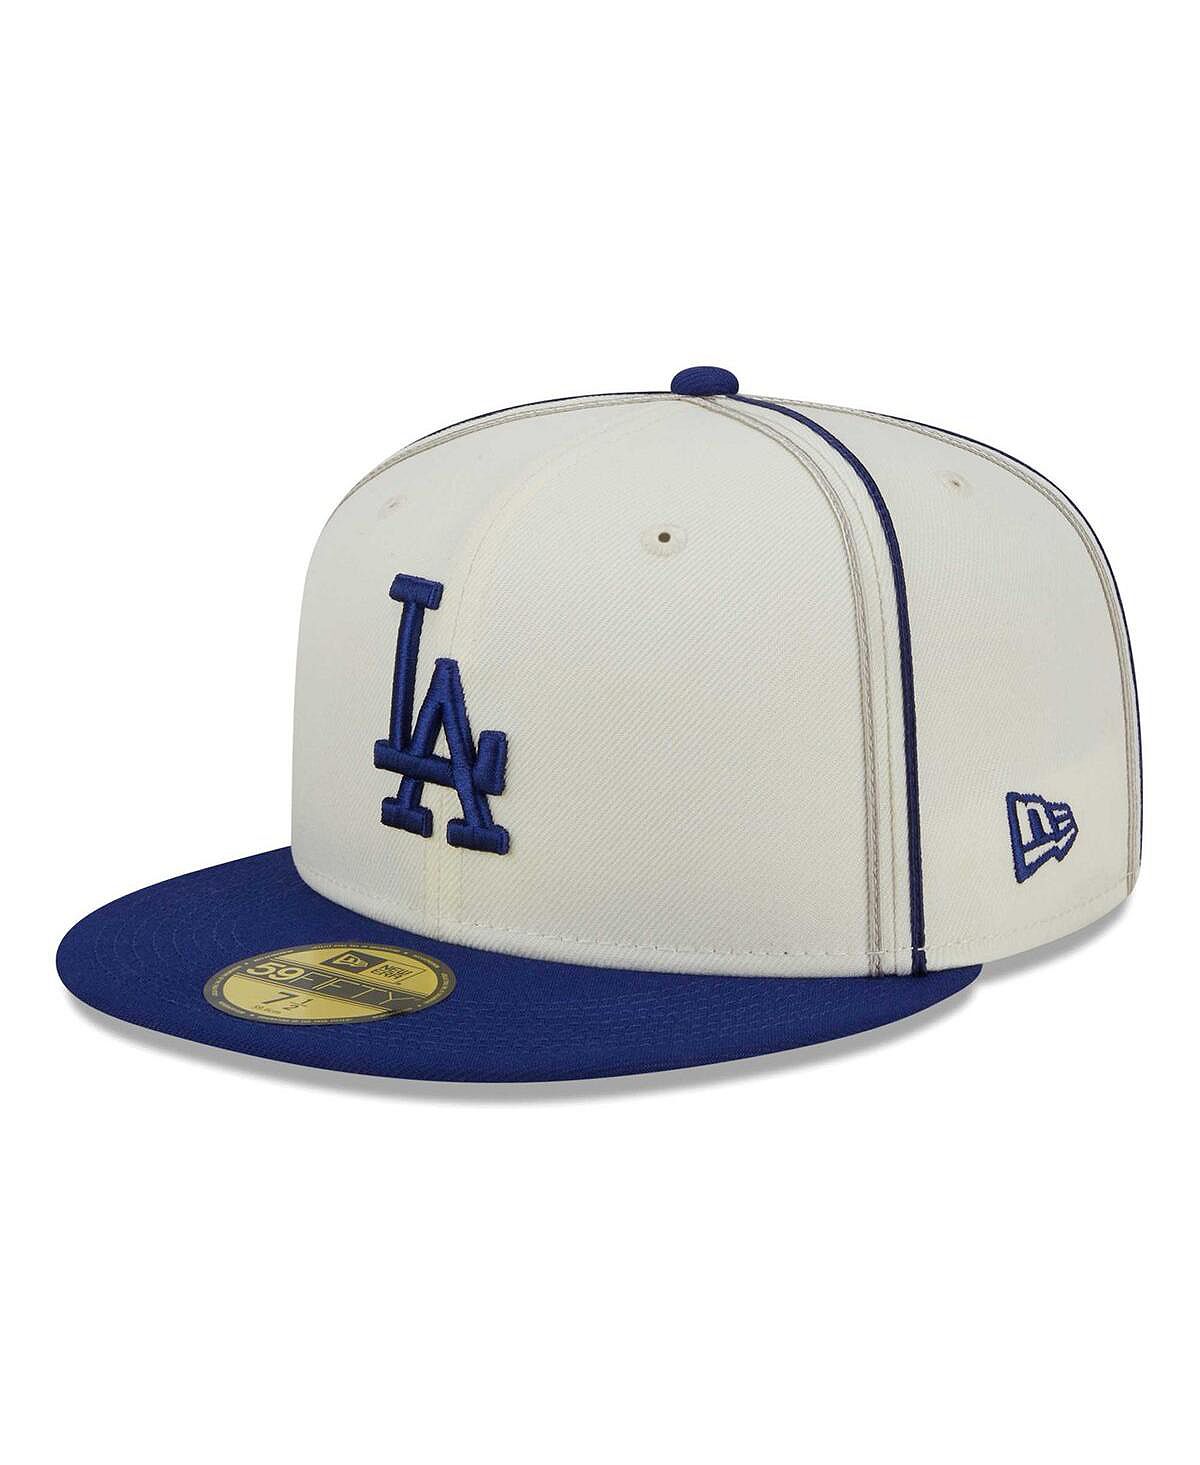 Мужская кремовая шляпа Royal Los Angeles Dodgers Chrome Sutash 59FIFTY. New Era набор мини пирожных cream royal 420 г